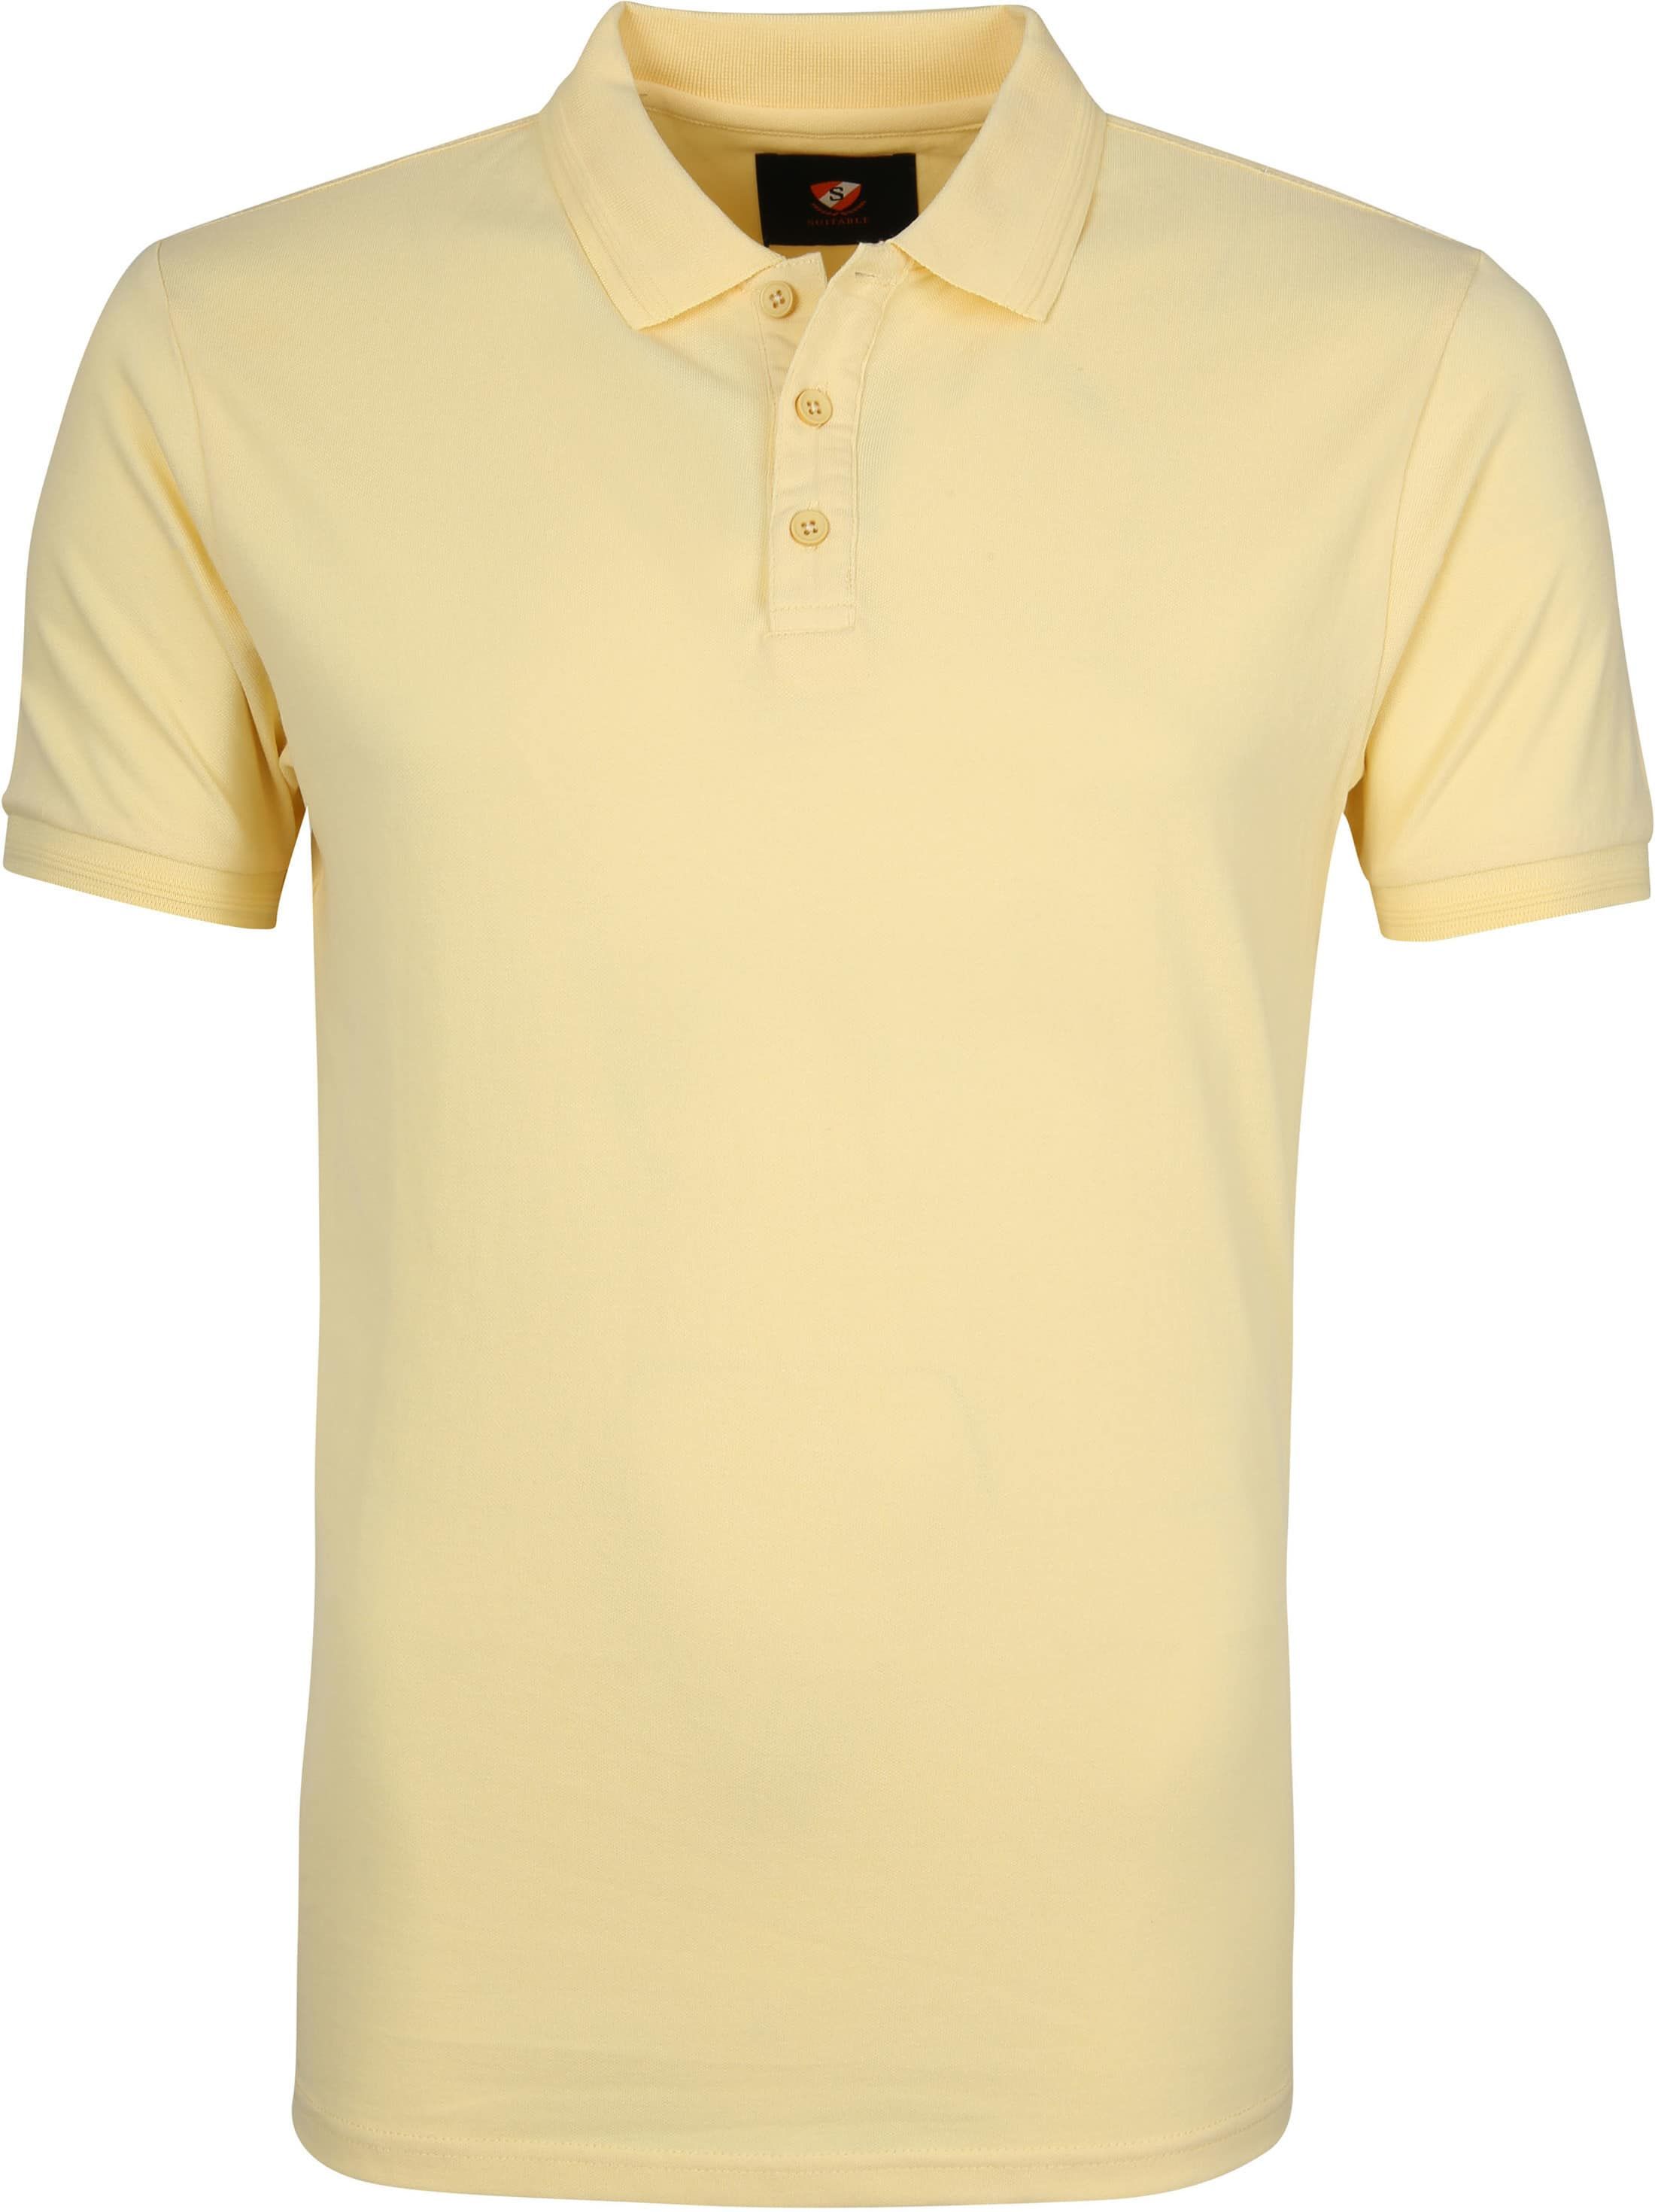 Suitable Oscar Polo Shirt Yellow size M